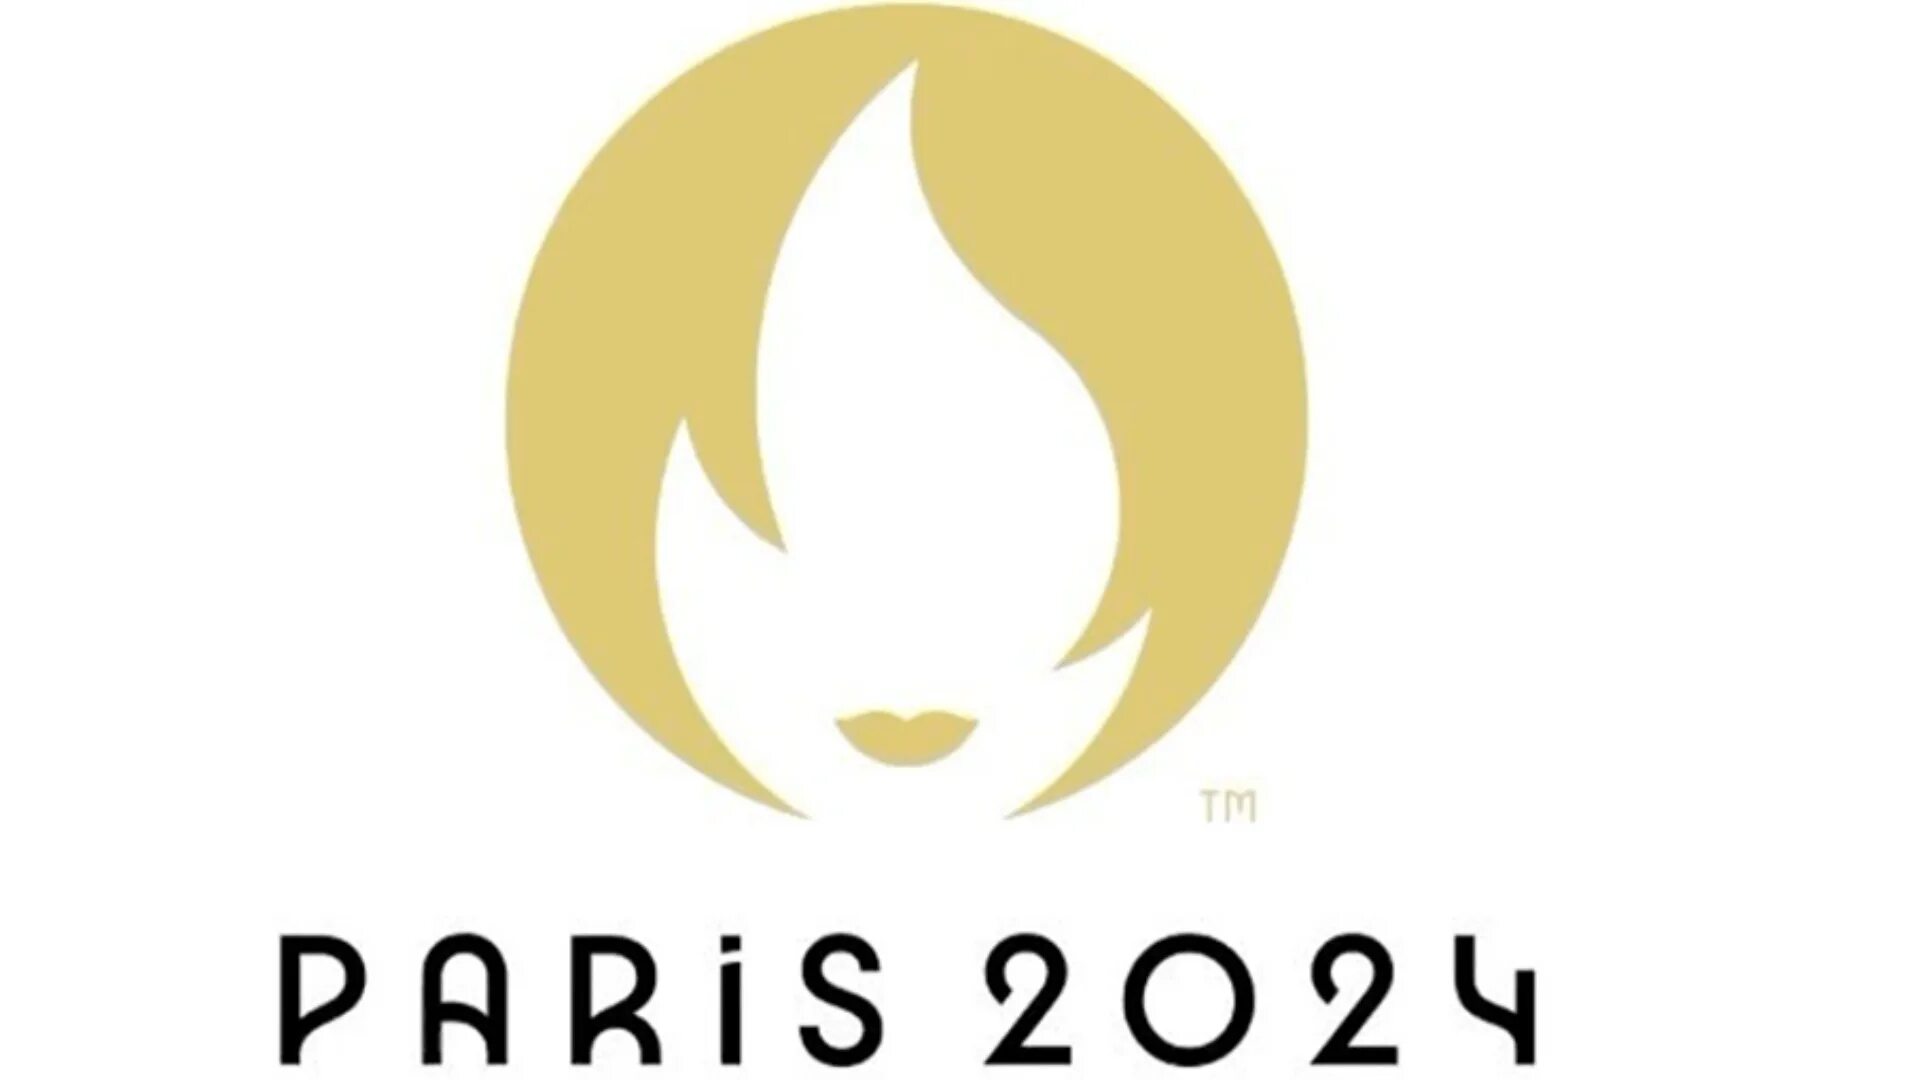 Лого 2024 года. Эмблема олимпиады 2024. Символ Олимпийских игр 2024 в Париже. Логотип олимпиады Париж.